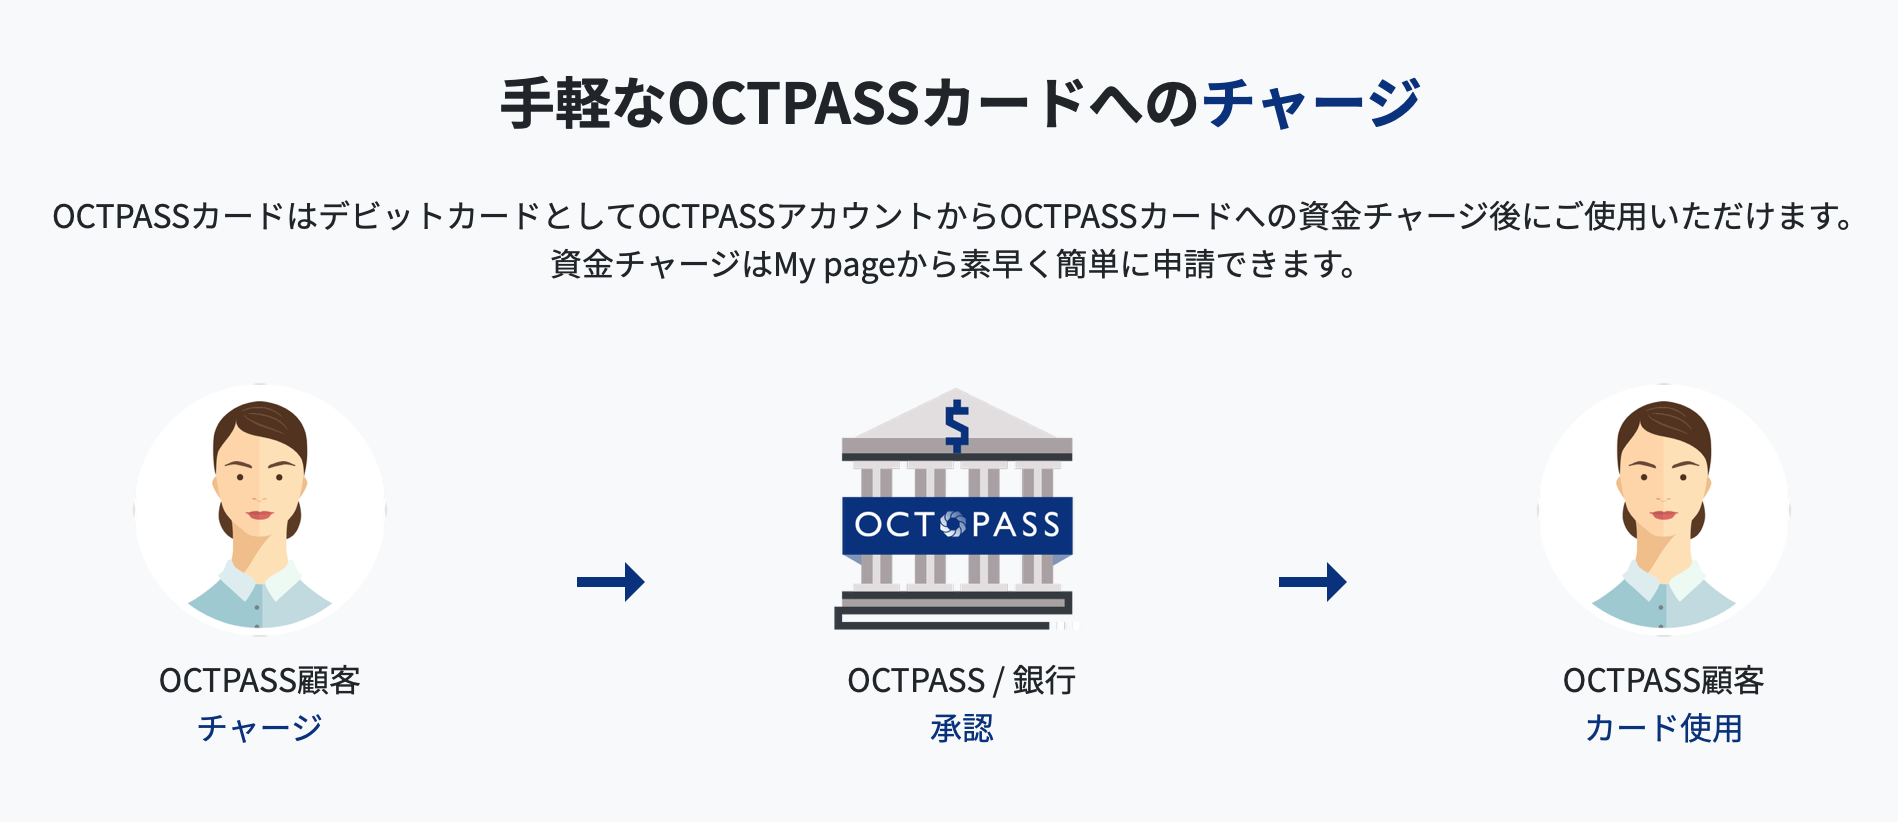 OCTPASSカードへの仮想通貨(暗号資産)のチャージ OCTPASSカードはデビットカードとしてOCTPASSアカウントからOCTPASSカードへの仮想通貨(暗号資産)といった資金チャージ後にご使用いただけます。 仮想通貨(暗号資産)といった資金チャージはMy pageから素早く簡単に申請できます。